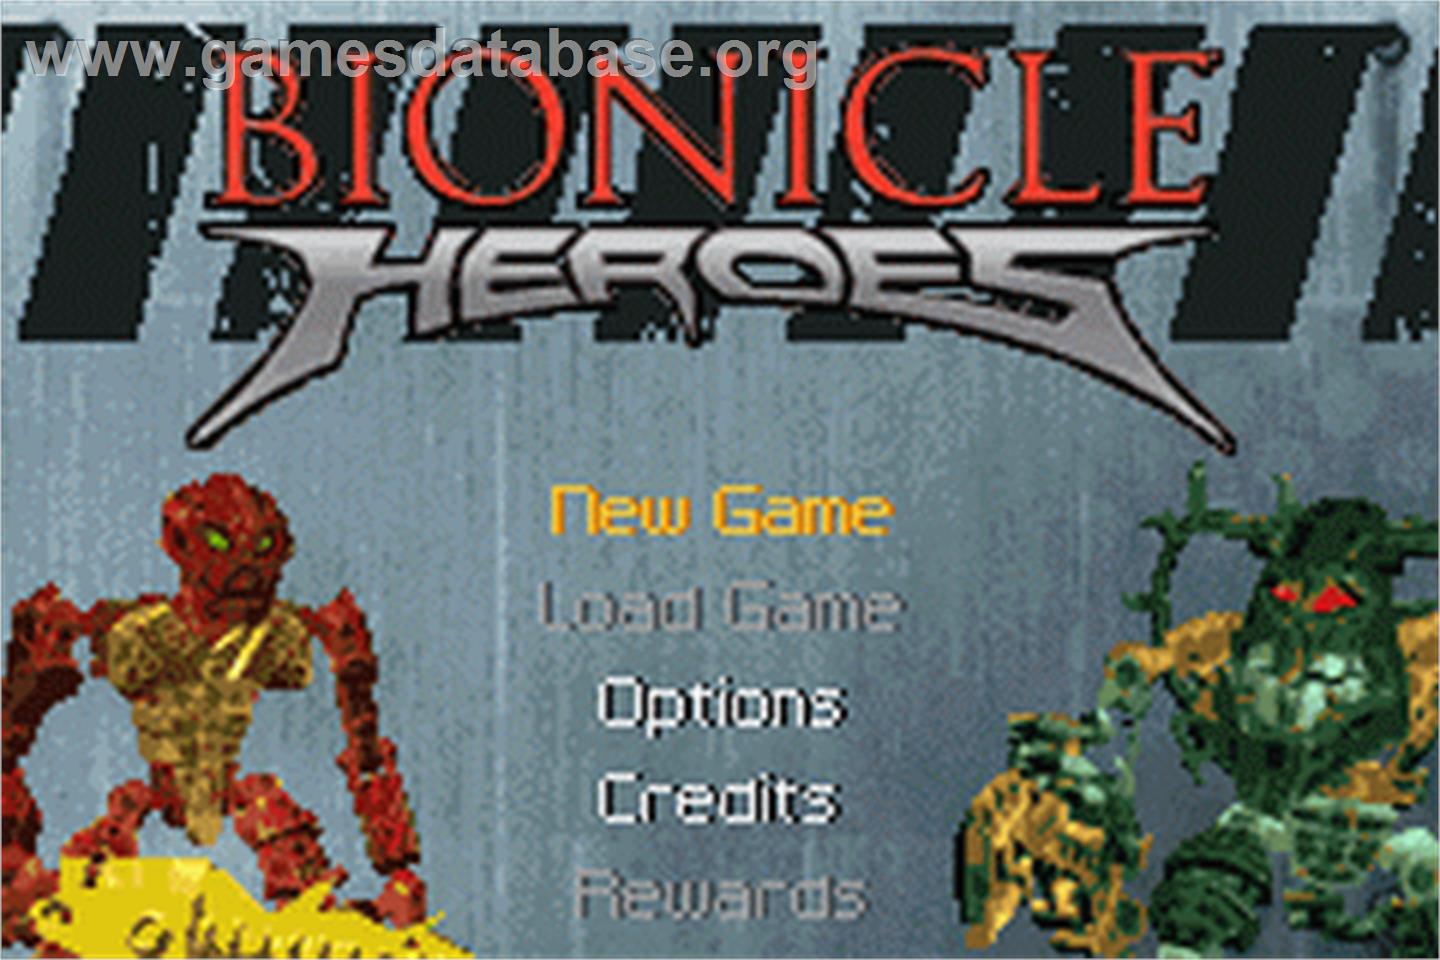 Bionicle Heroes - Nintendo Game Boy Advance - Artwork - Title Screen